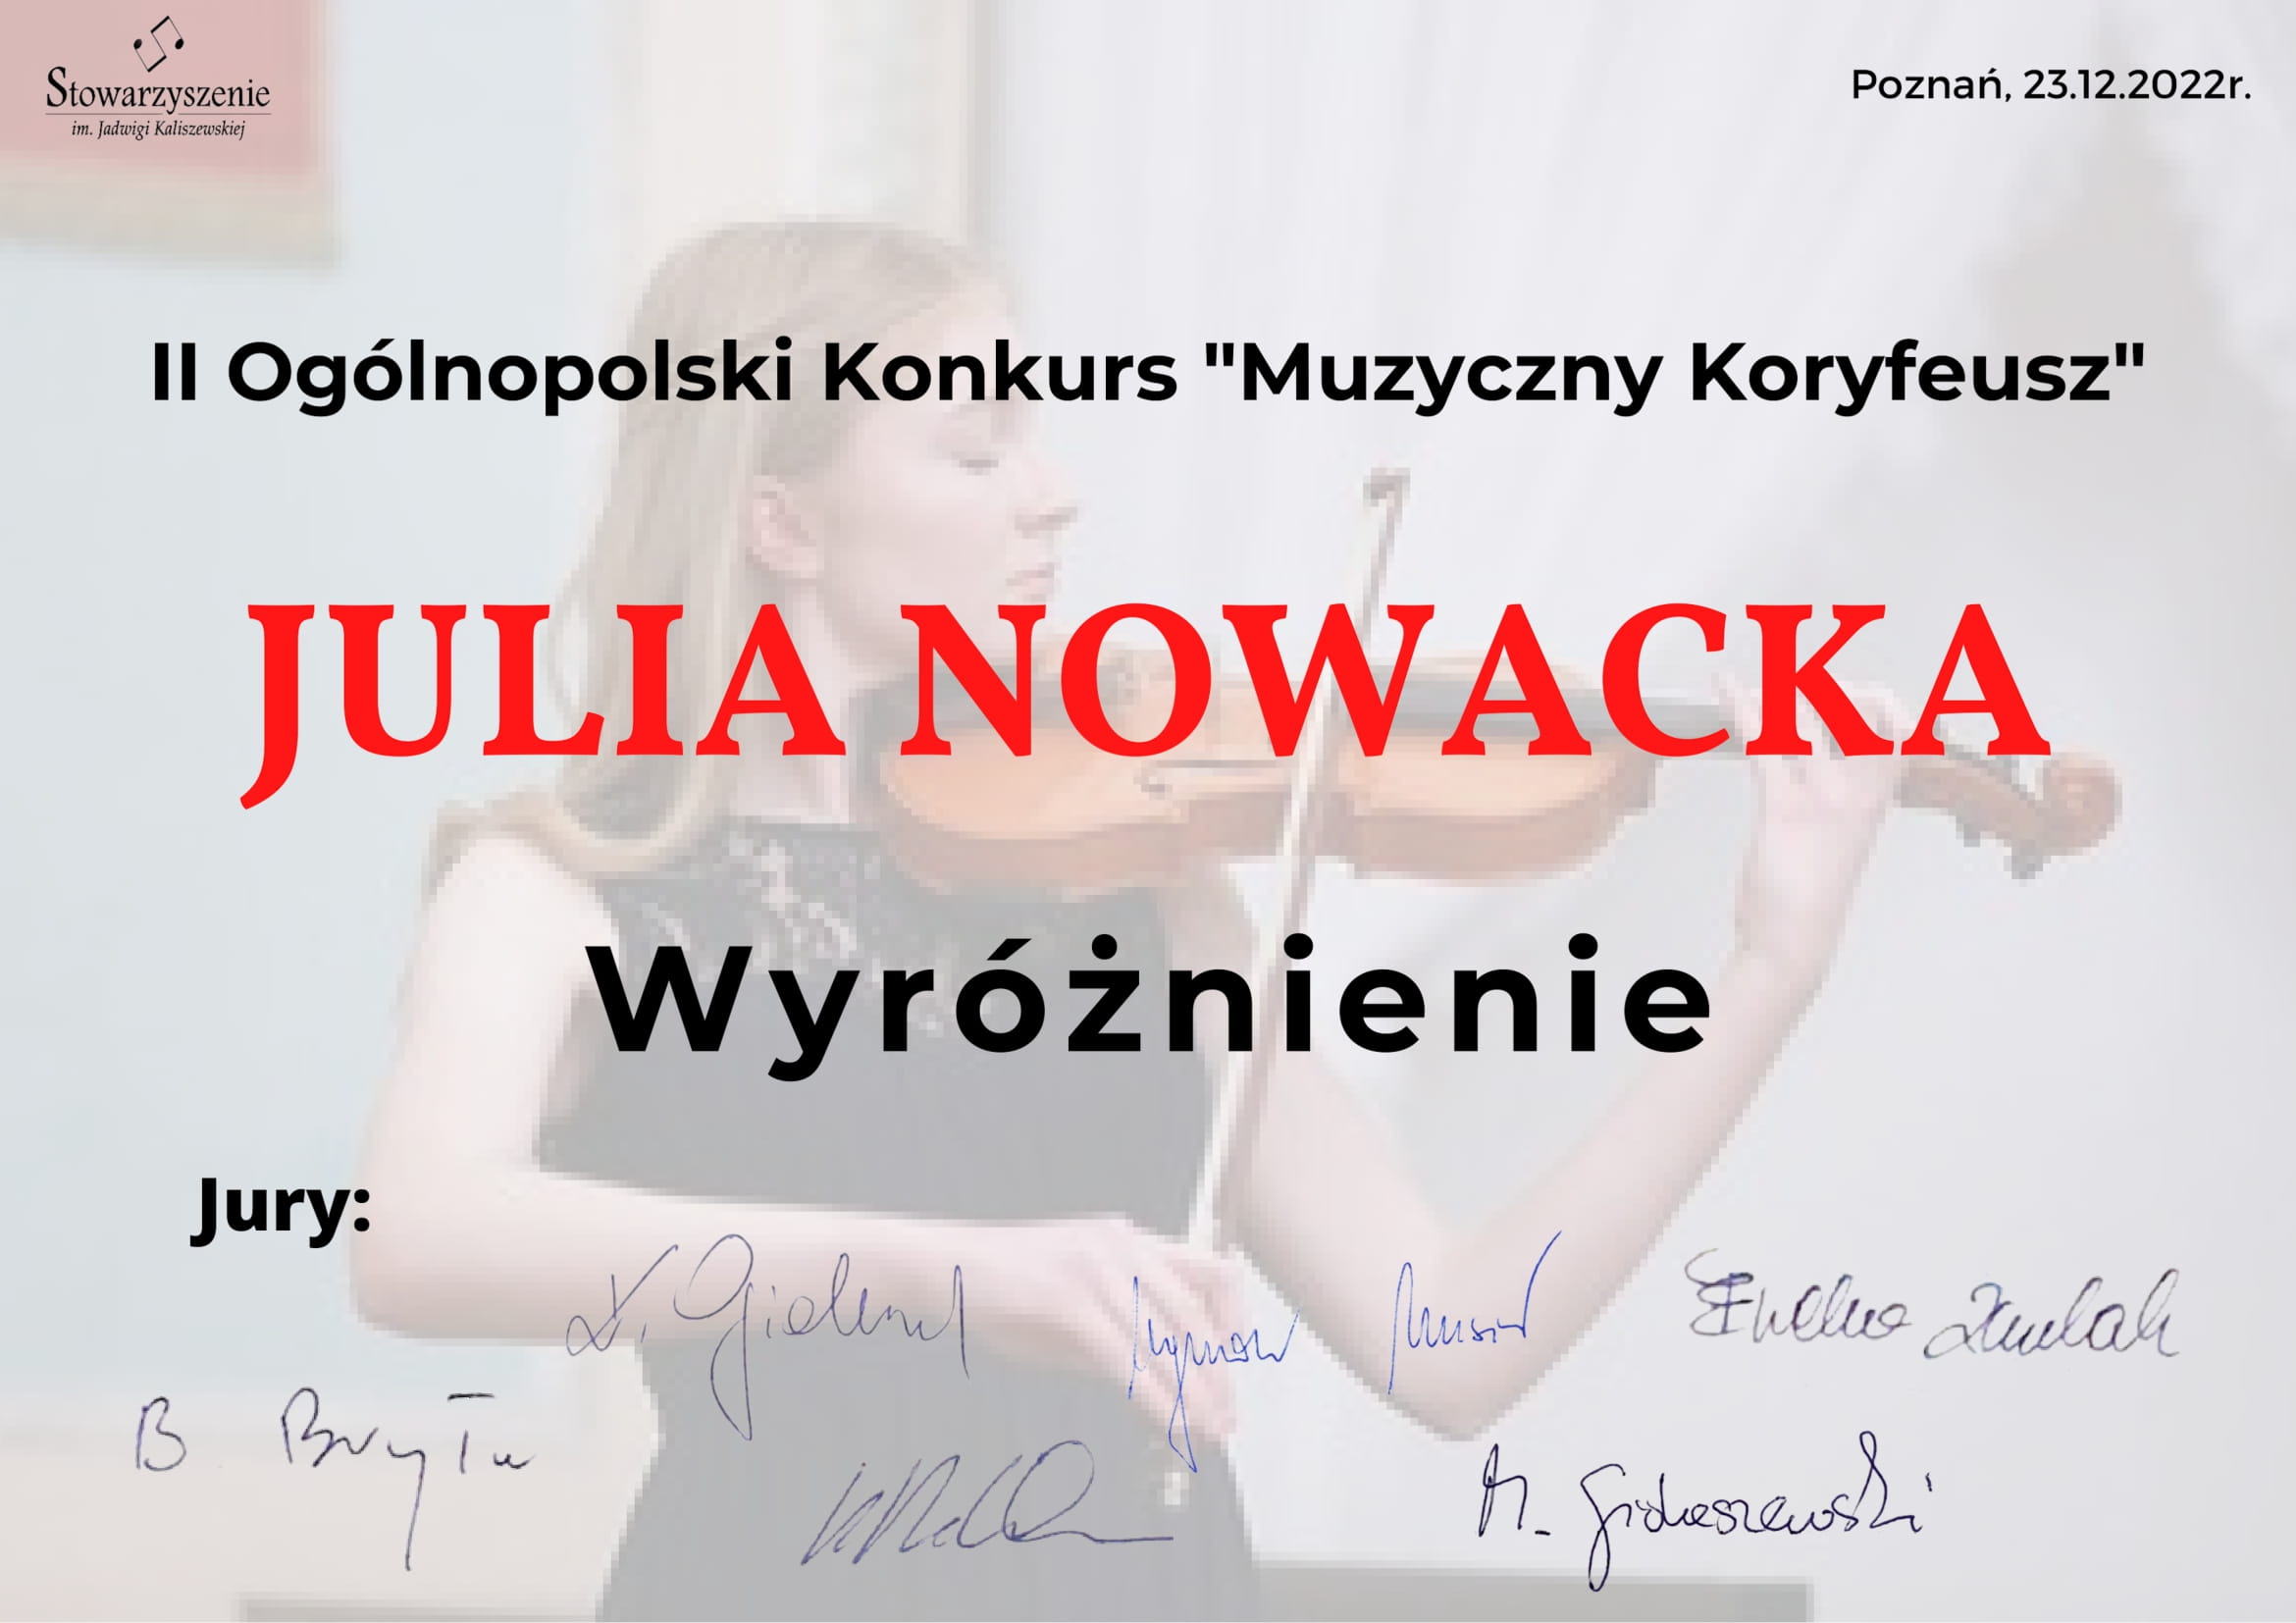 dyplom Julia Nowacka